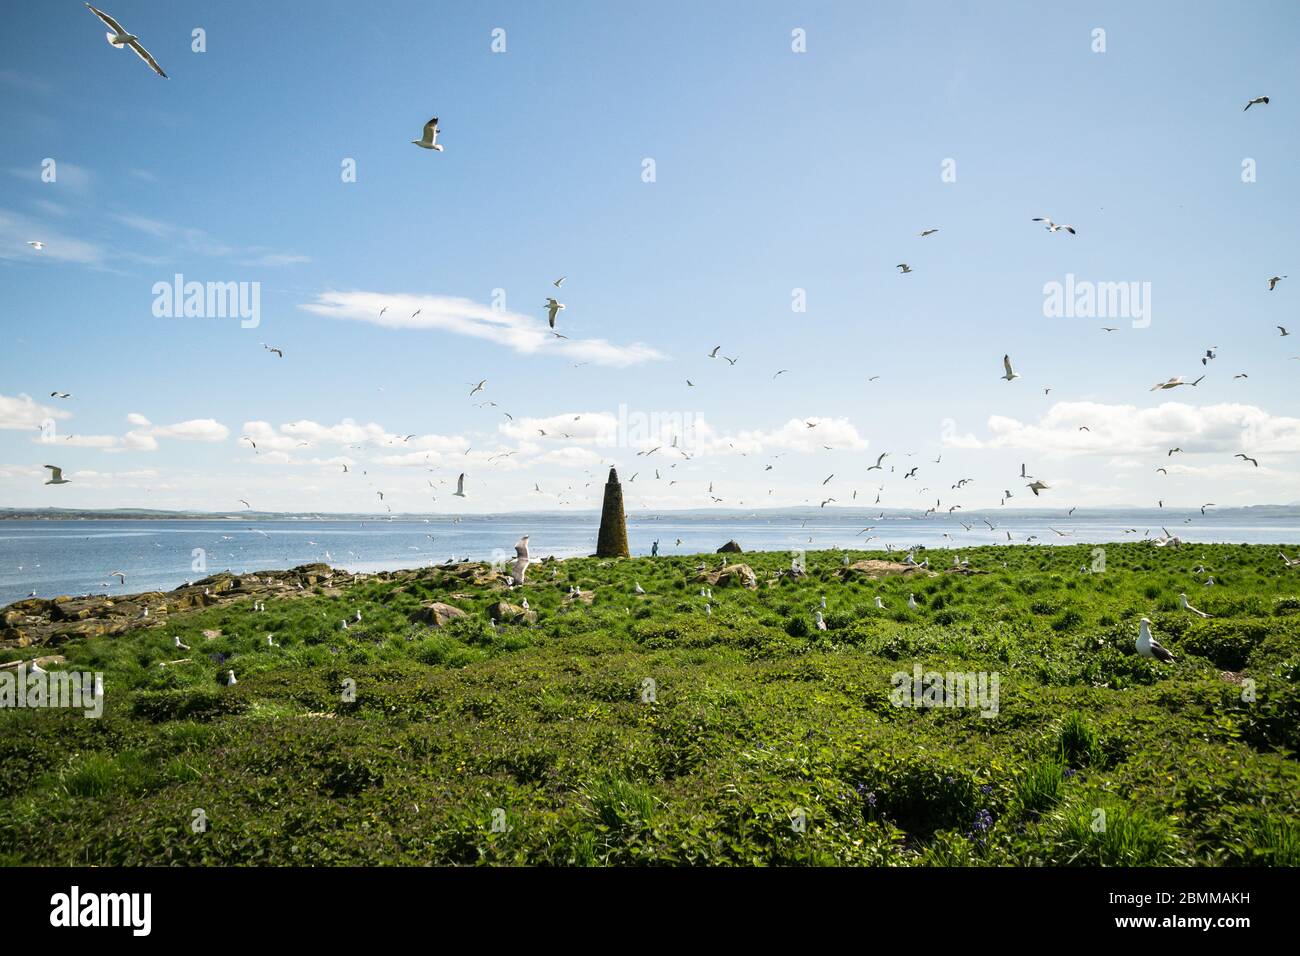 A flock of gulls on an island seabird colony with a cairn, Lady Isle, Scotland, UK Stock Photo